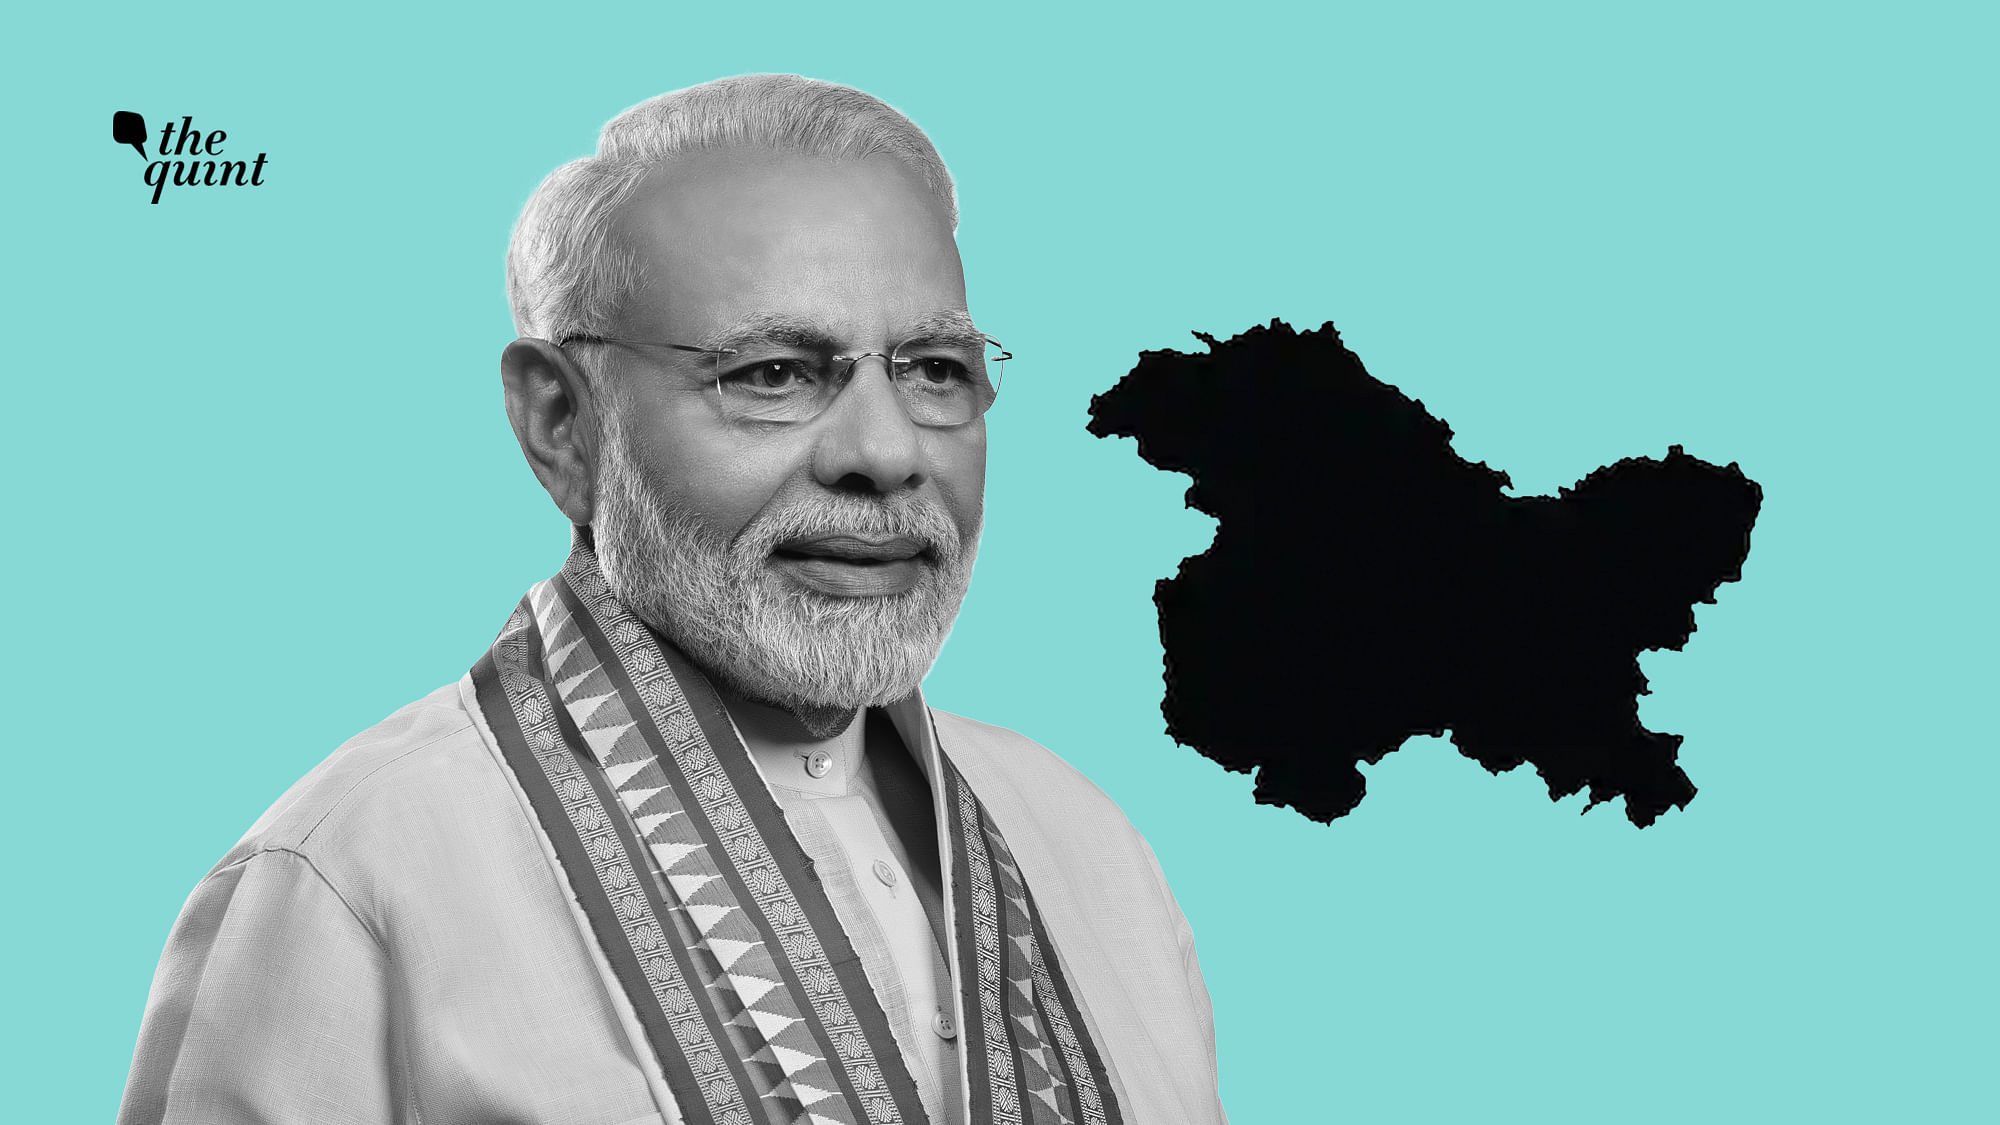 PM Modi &amp; map of Kashmir. Image used for representational purposes.